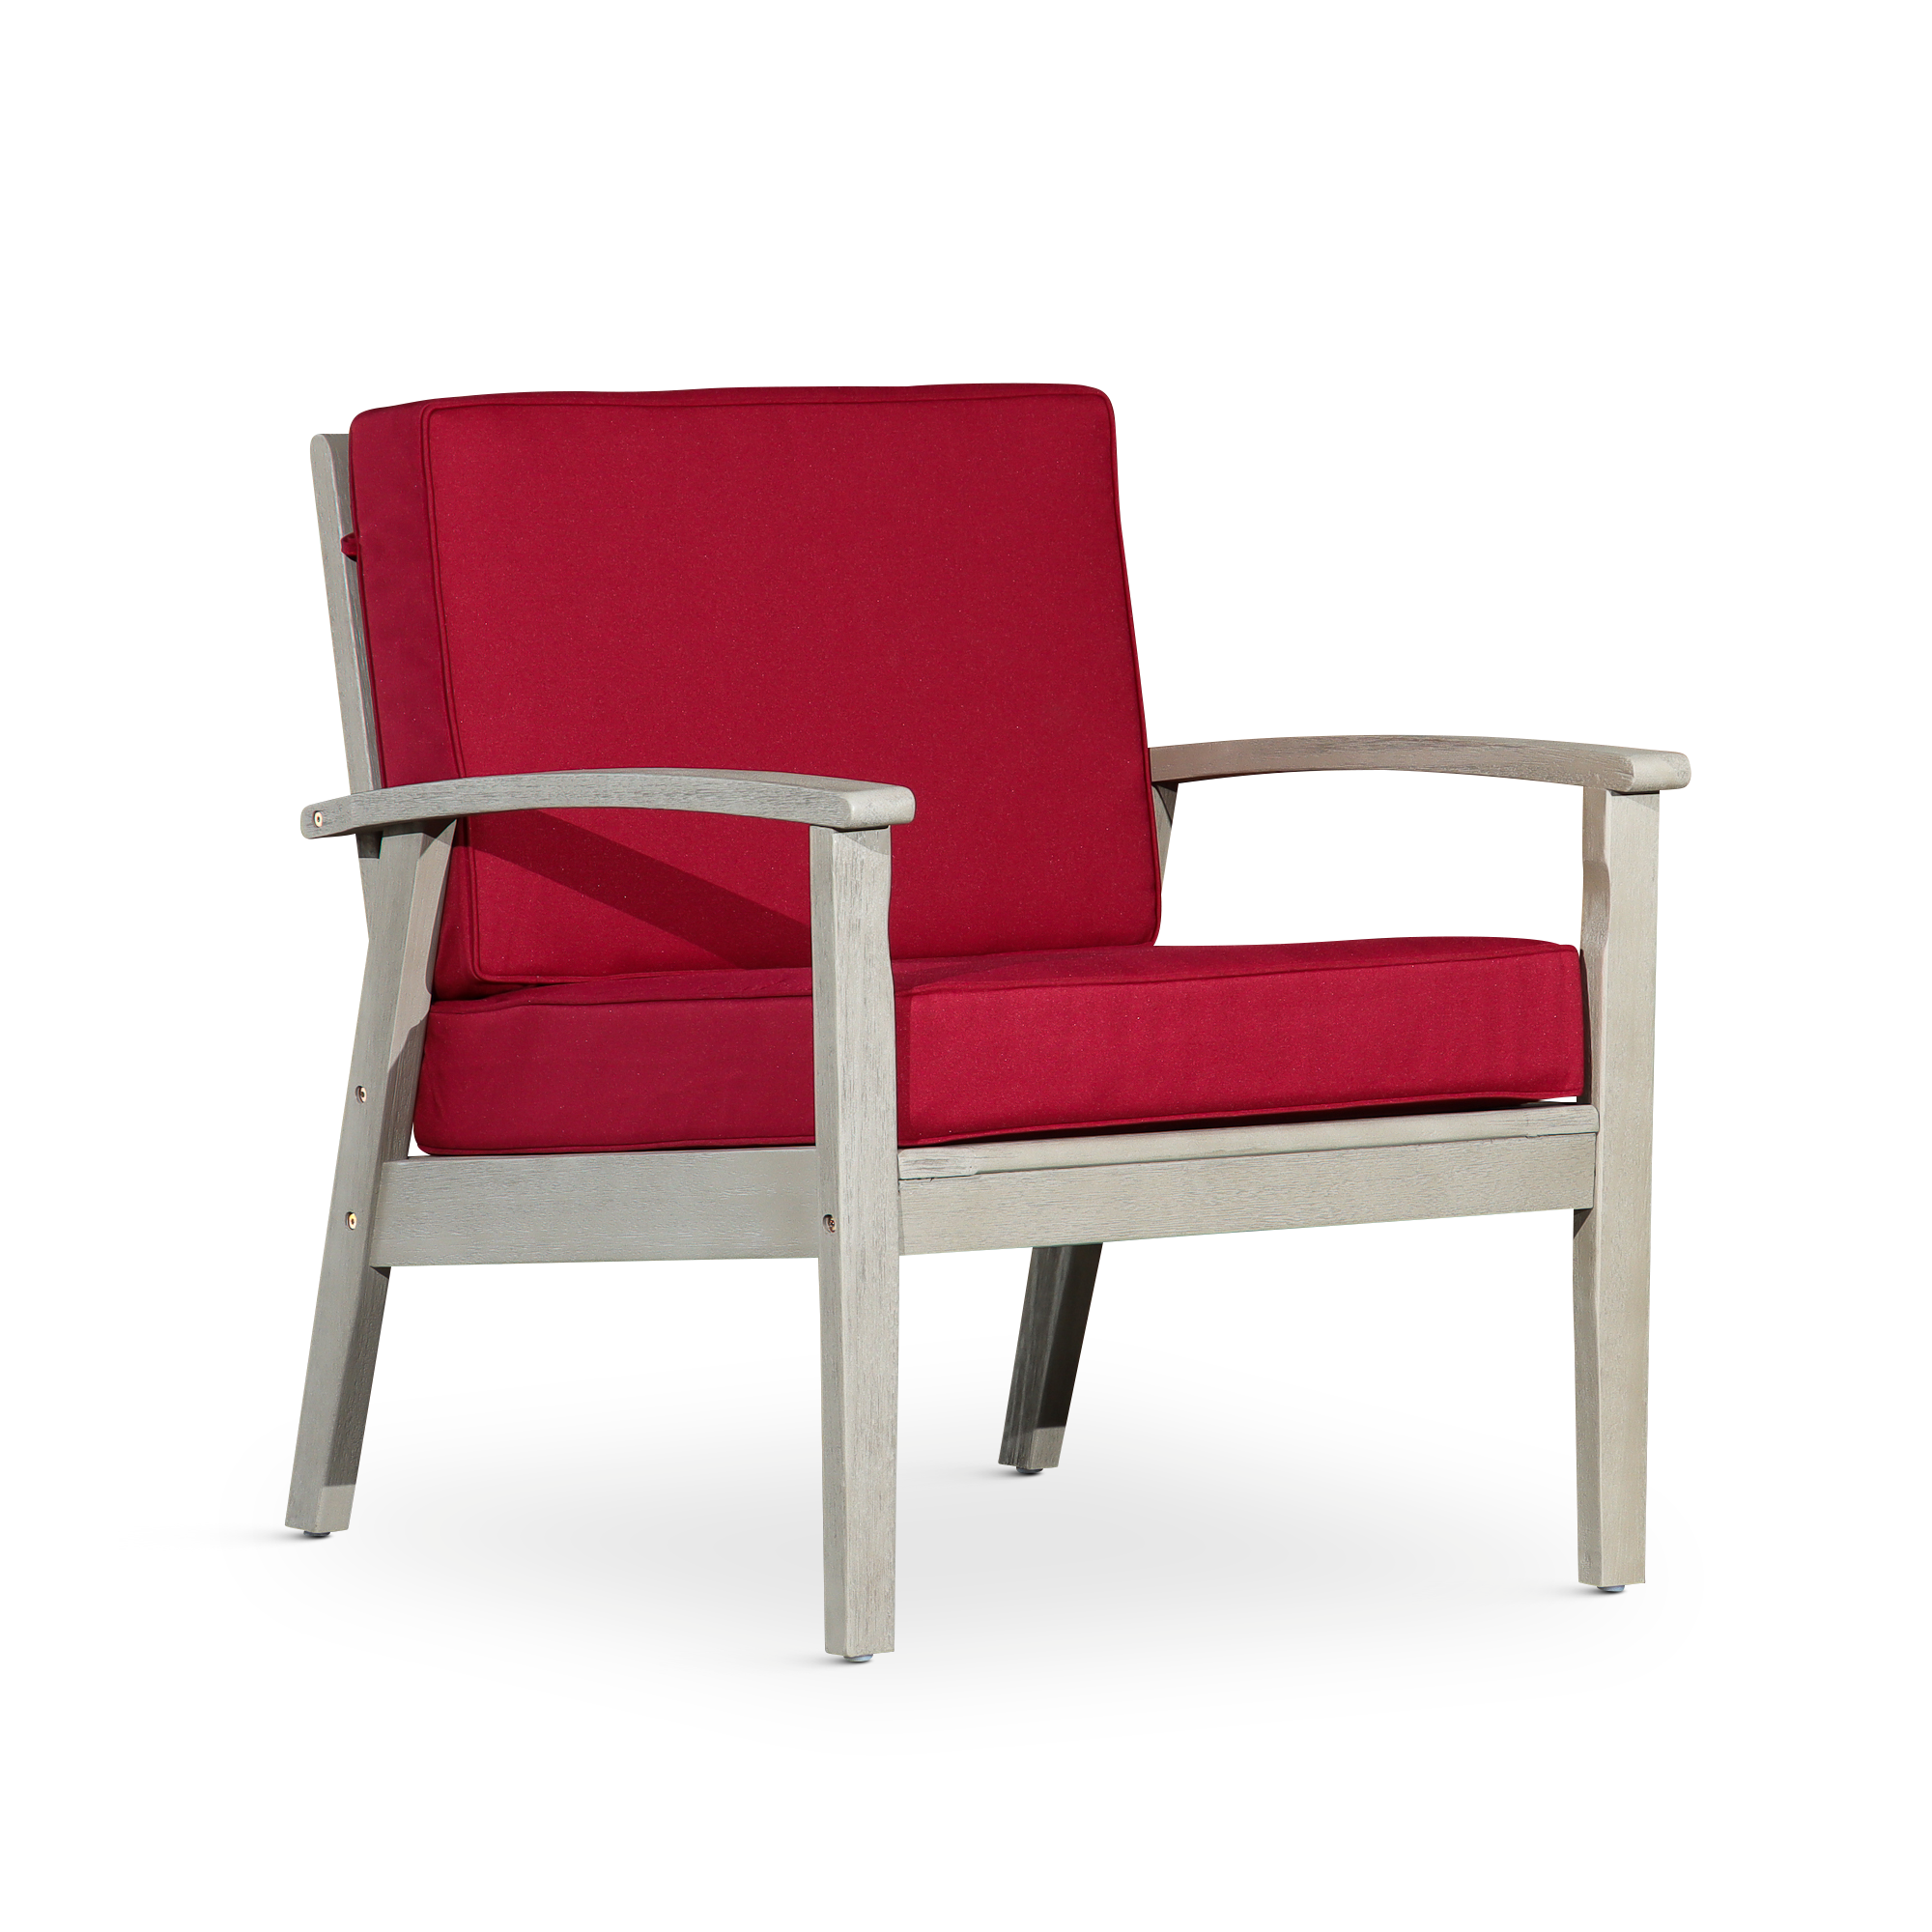 Deep Seat Eucalyptus Chair, Driftwood Gray Finish gray-eucalyptus